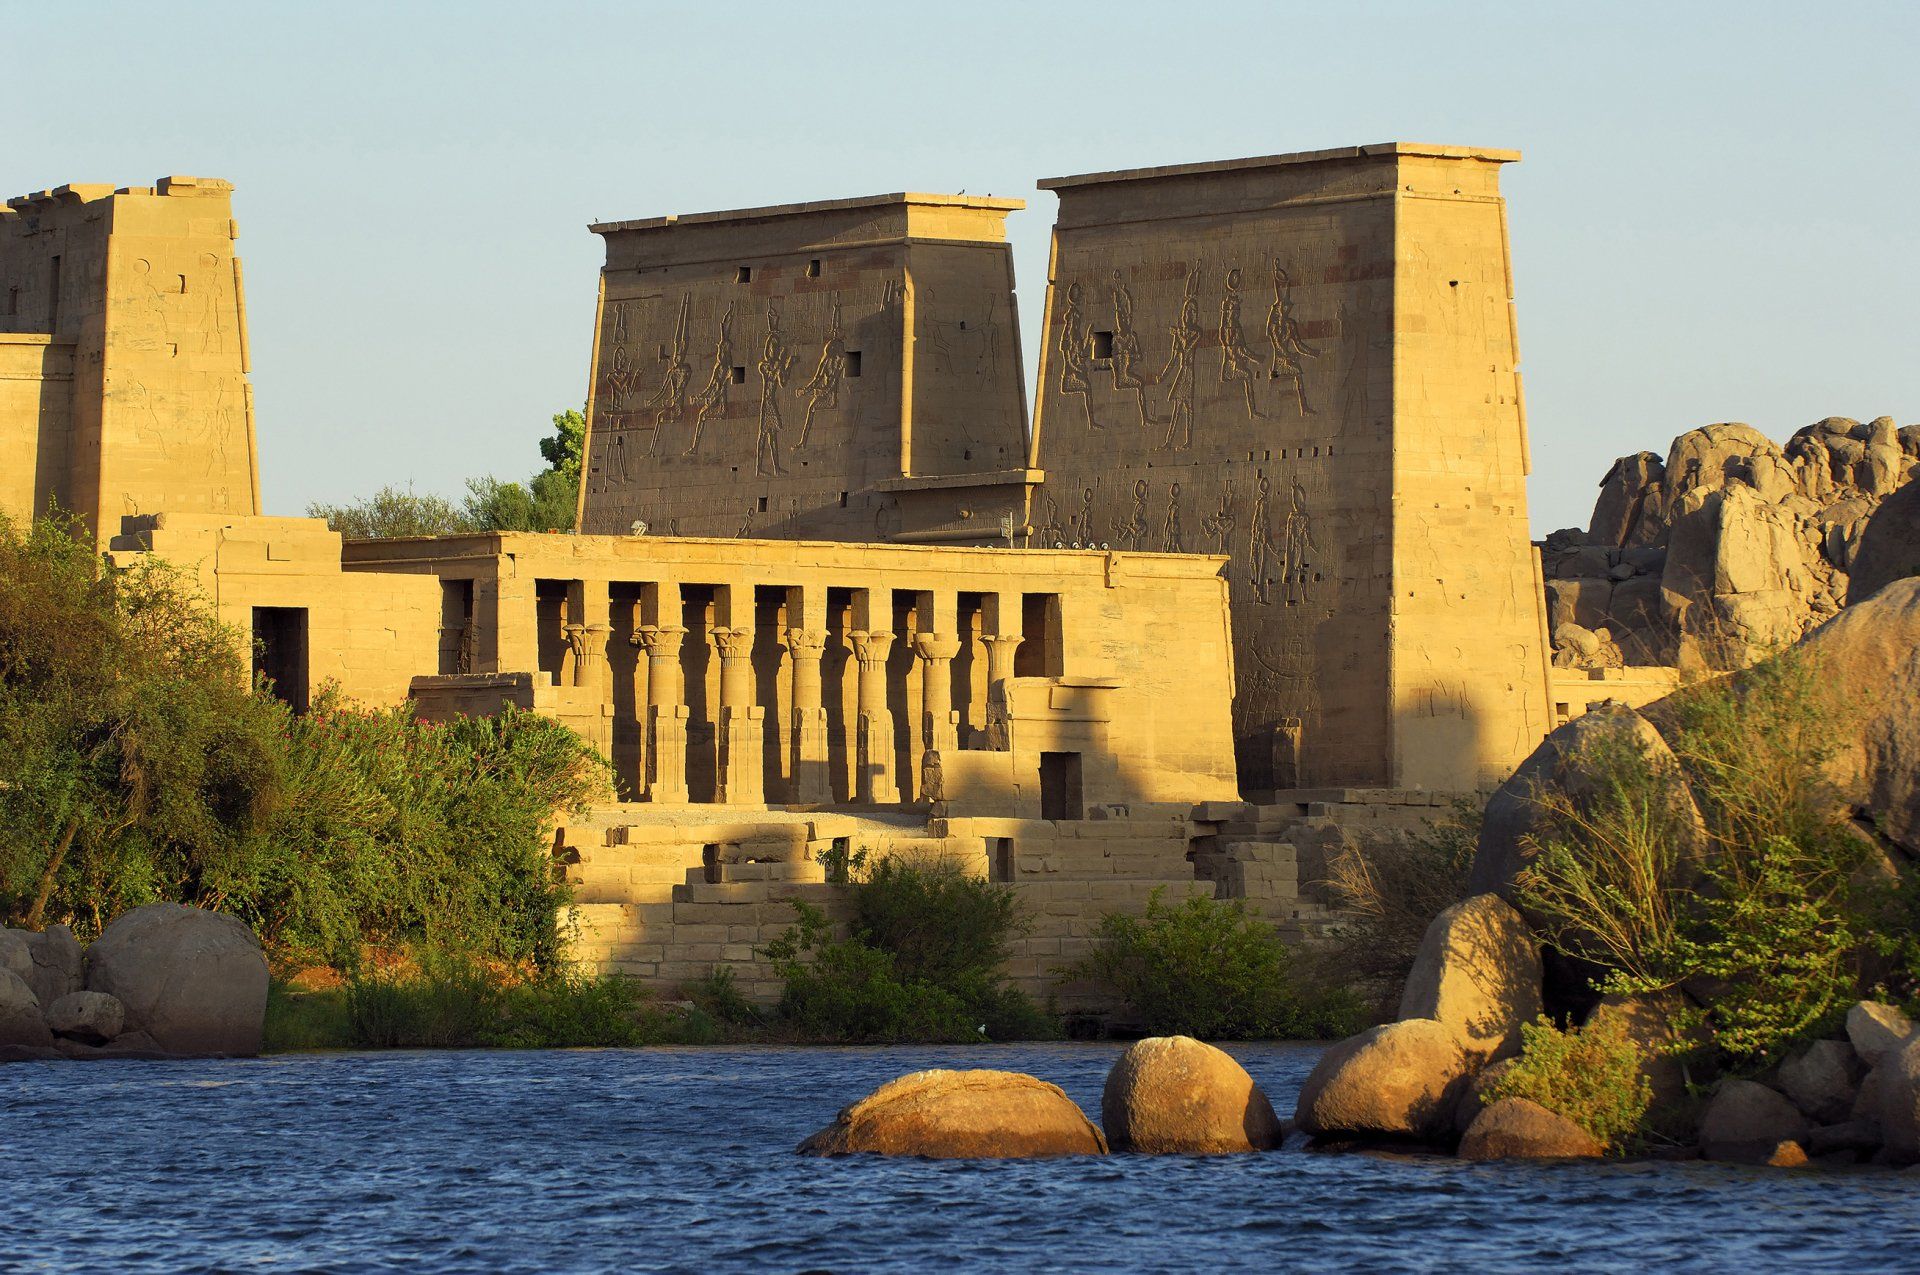 Philae Temple, Egypt Nile Cruise, Cruise on the Nile, Nile View, Cruise 5 stars Nile Egypt, Nile Aviation, Cruise Luxor, Aswan Egypt, Nile River, Travel agency Egypt,